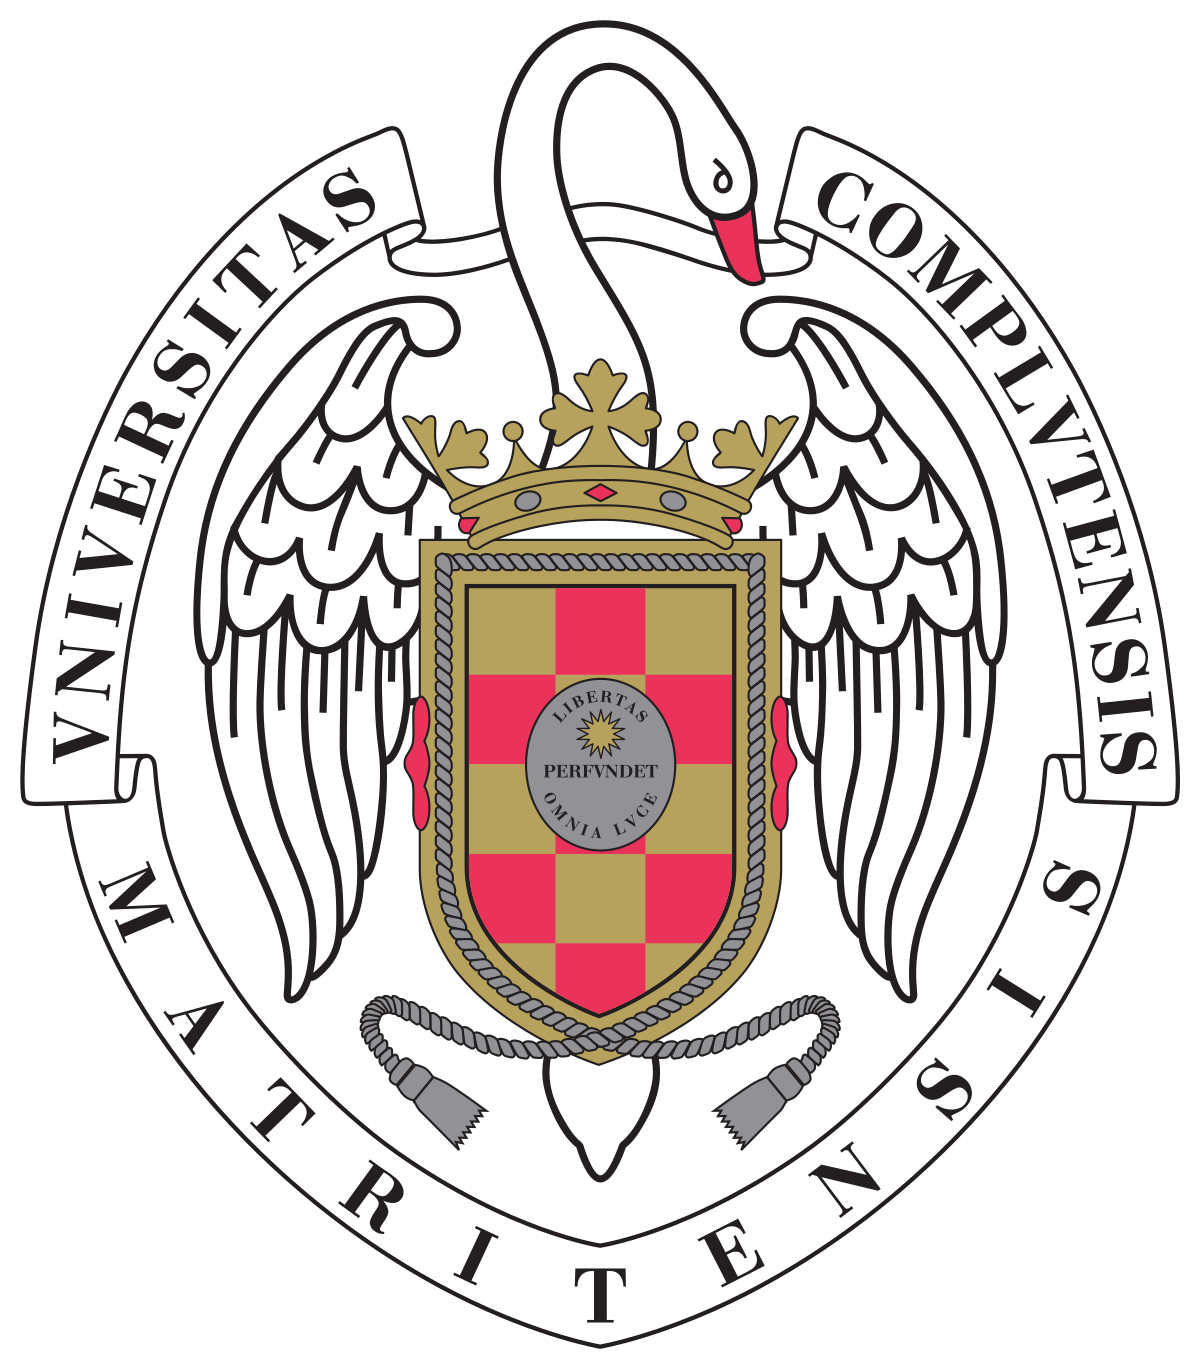 Universidad Complutense de Madrid - Wikipedia, la enciclopedia libre